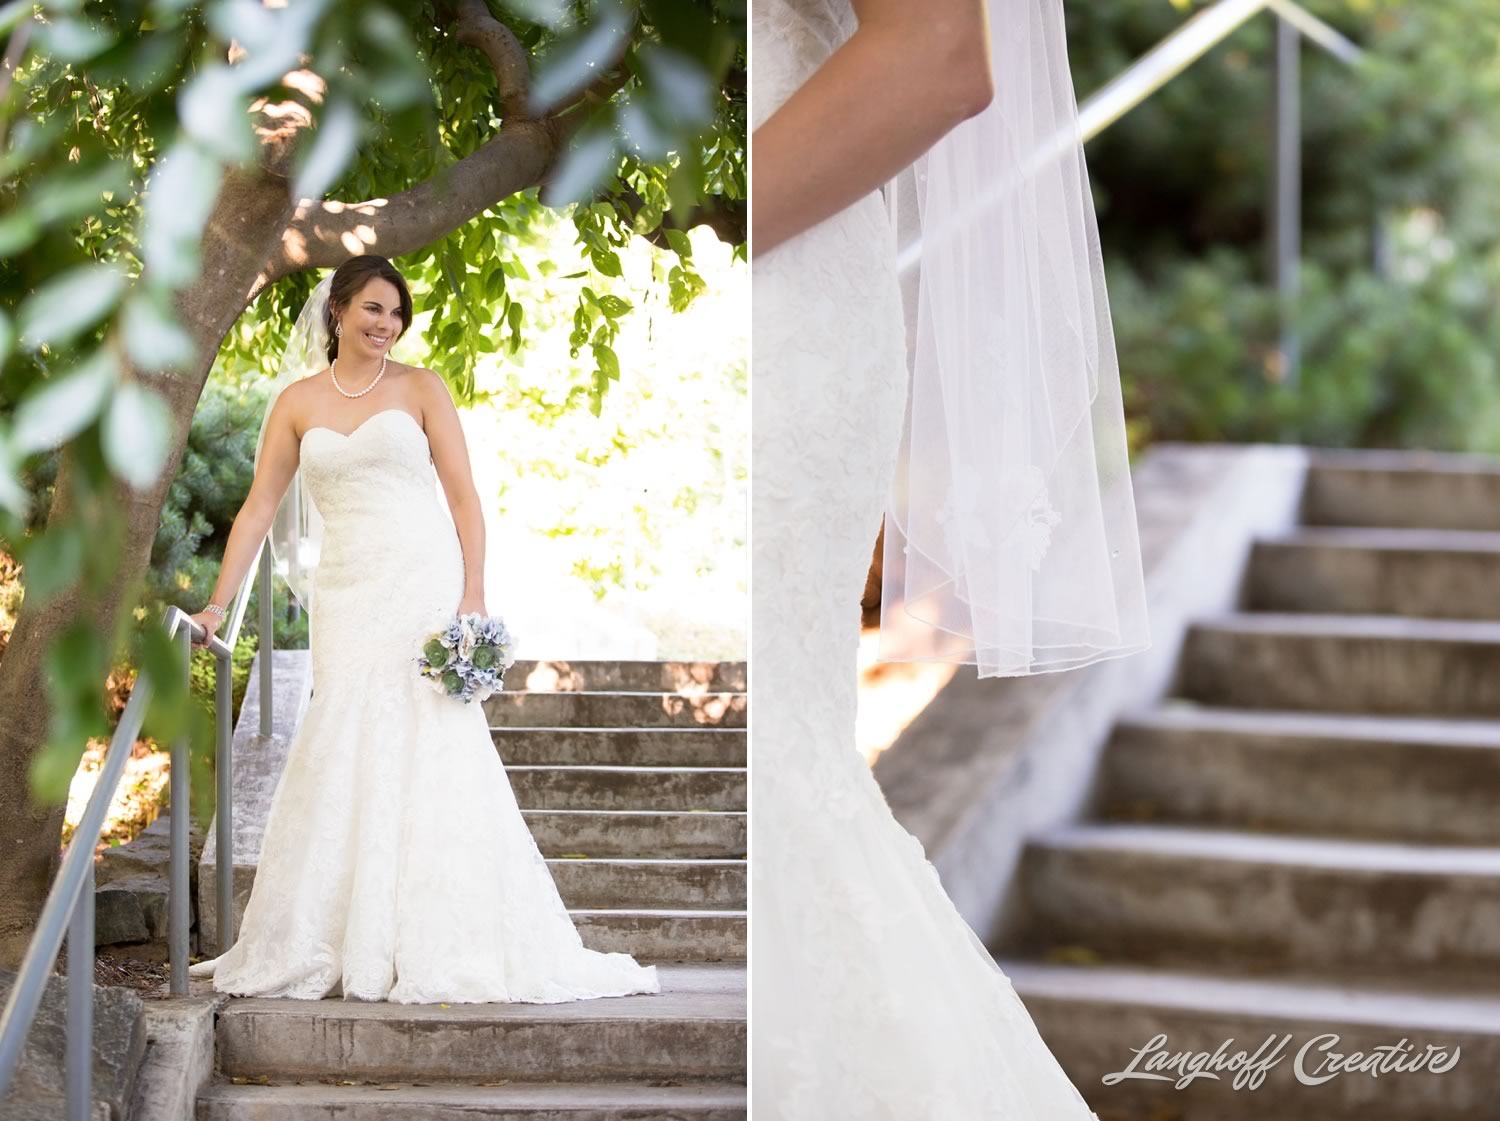 BridalSession-Bridals-RaleighBride-NCbride-JCRaulstonArboretum-RaleighWedding-WeddingPhotographer-LanghoffCreative-Amy2015-Bride-13-photo.jpg